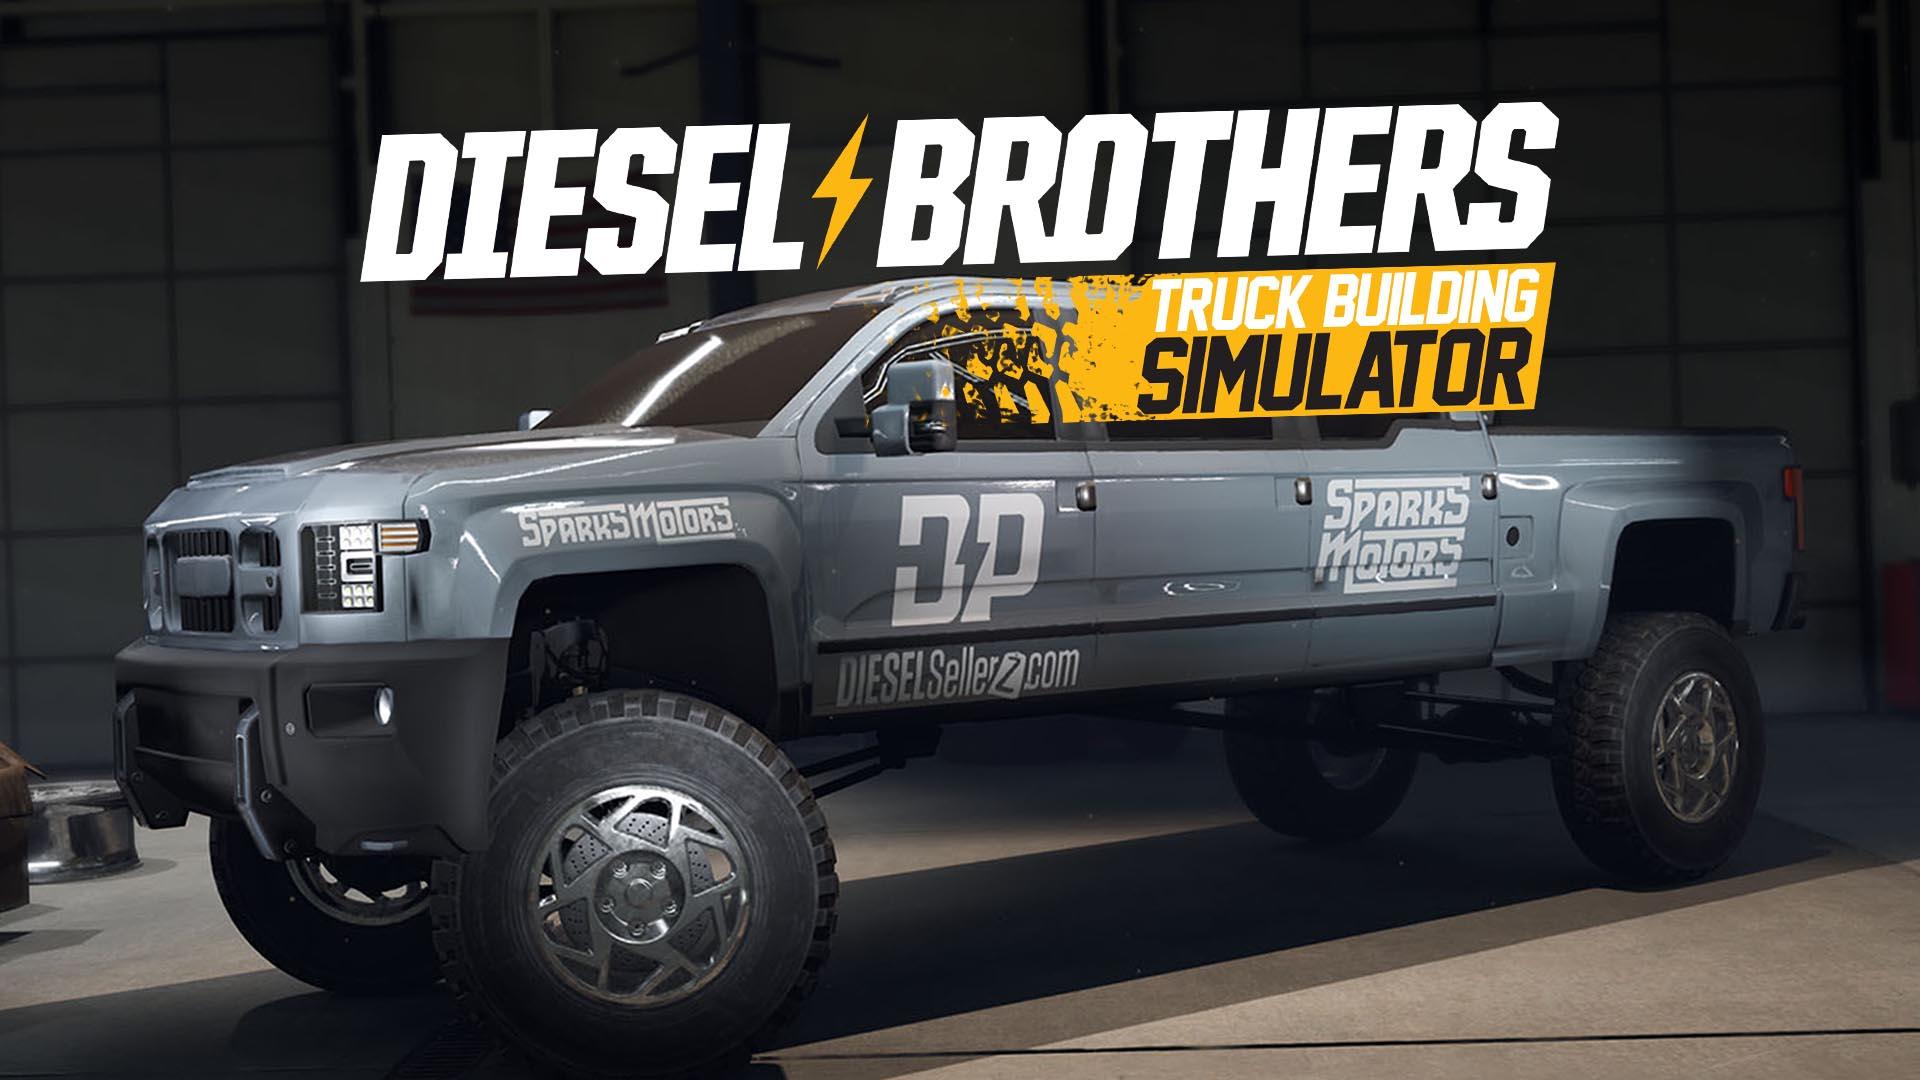 Diesel Brothers: Truck Building Simulator confirma su llegada a Xbox